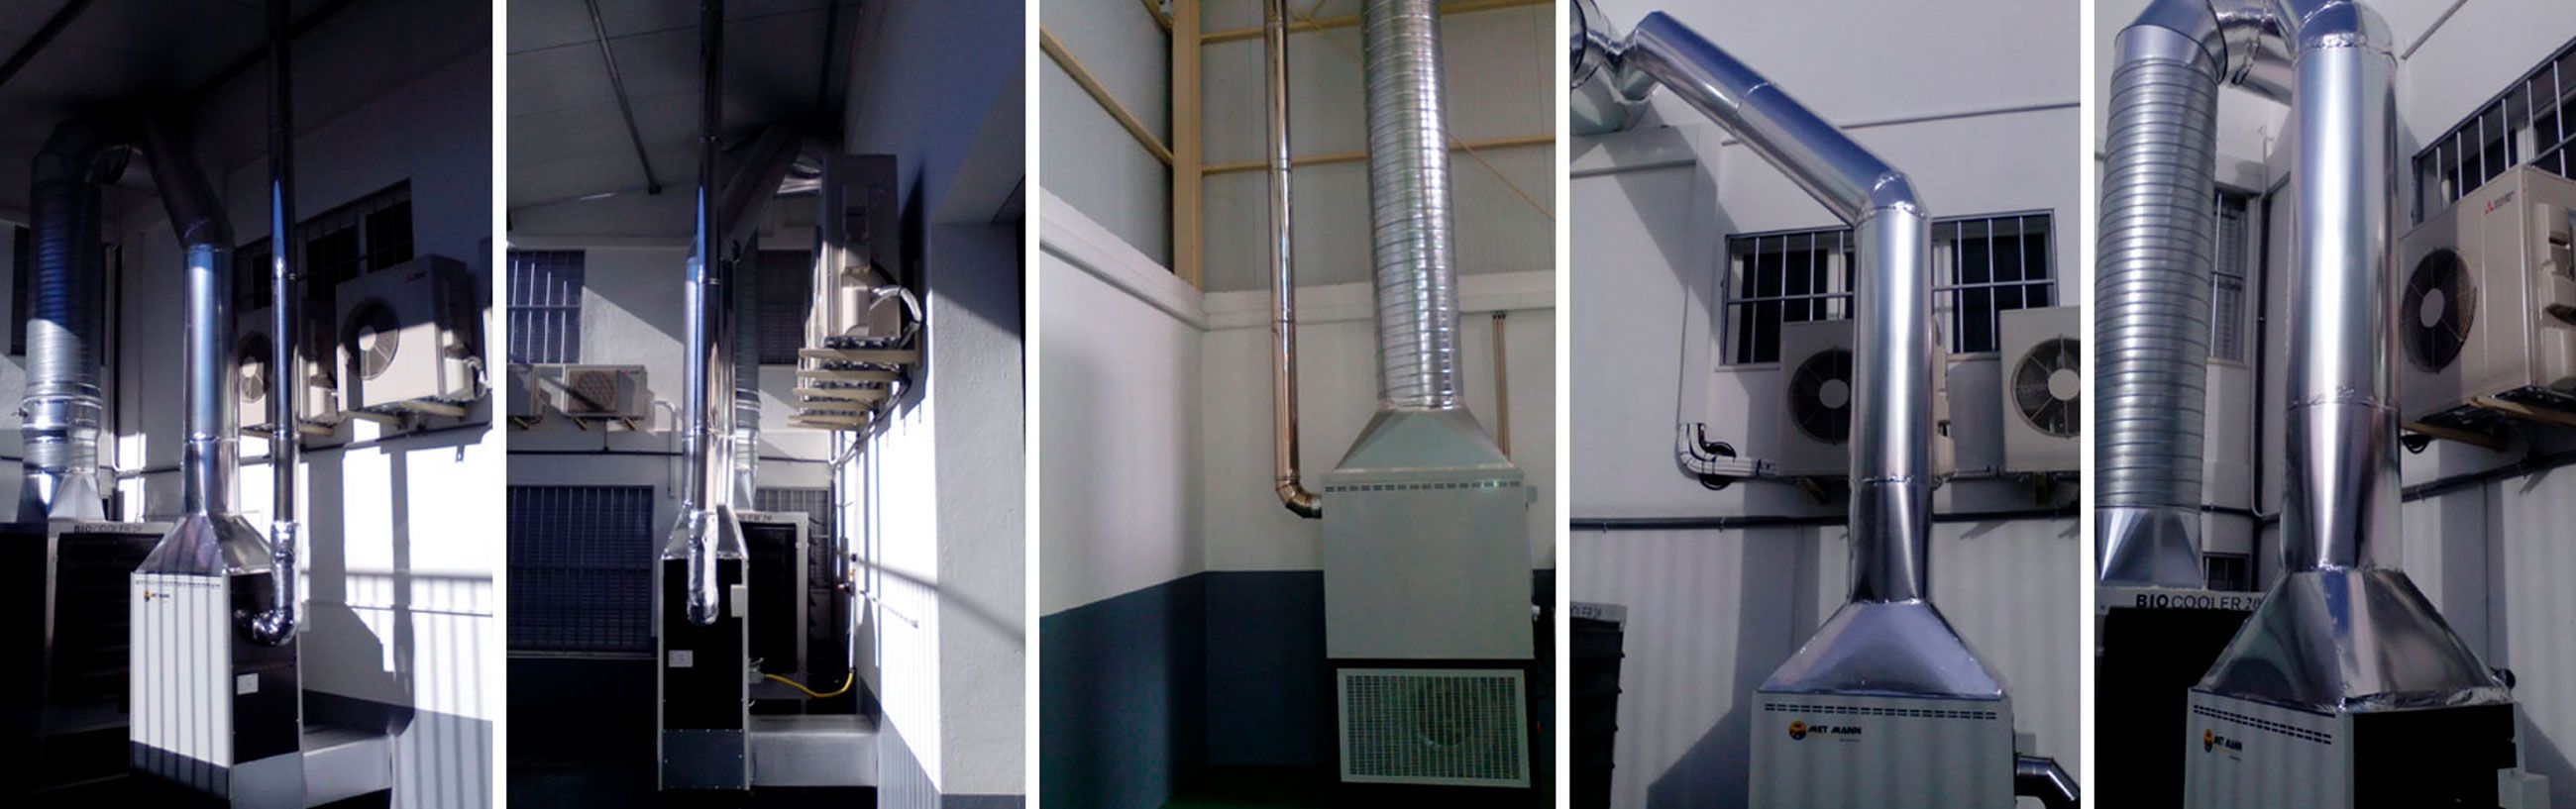 Chatron Industrial Heat Generators Installation Example 3